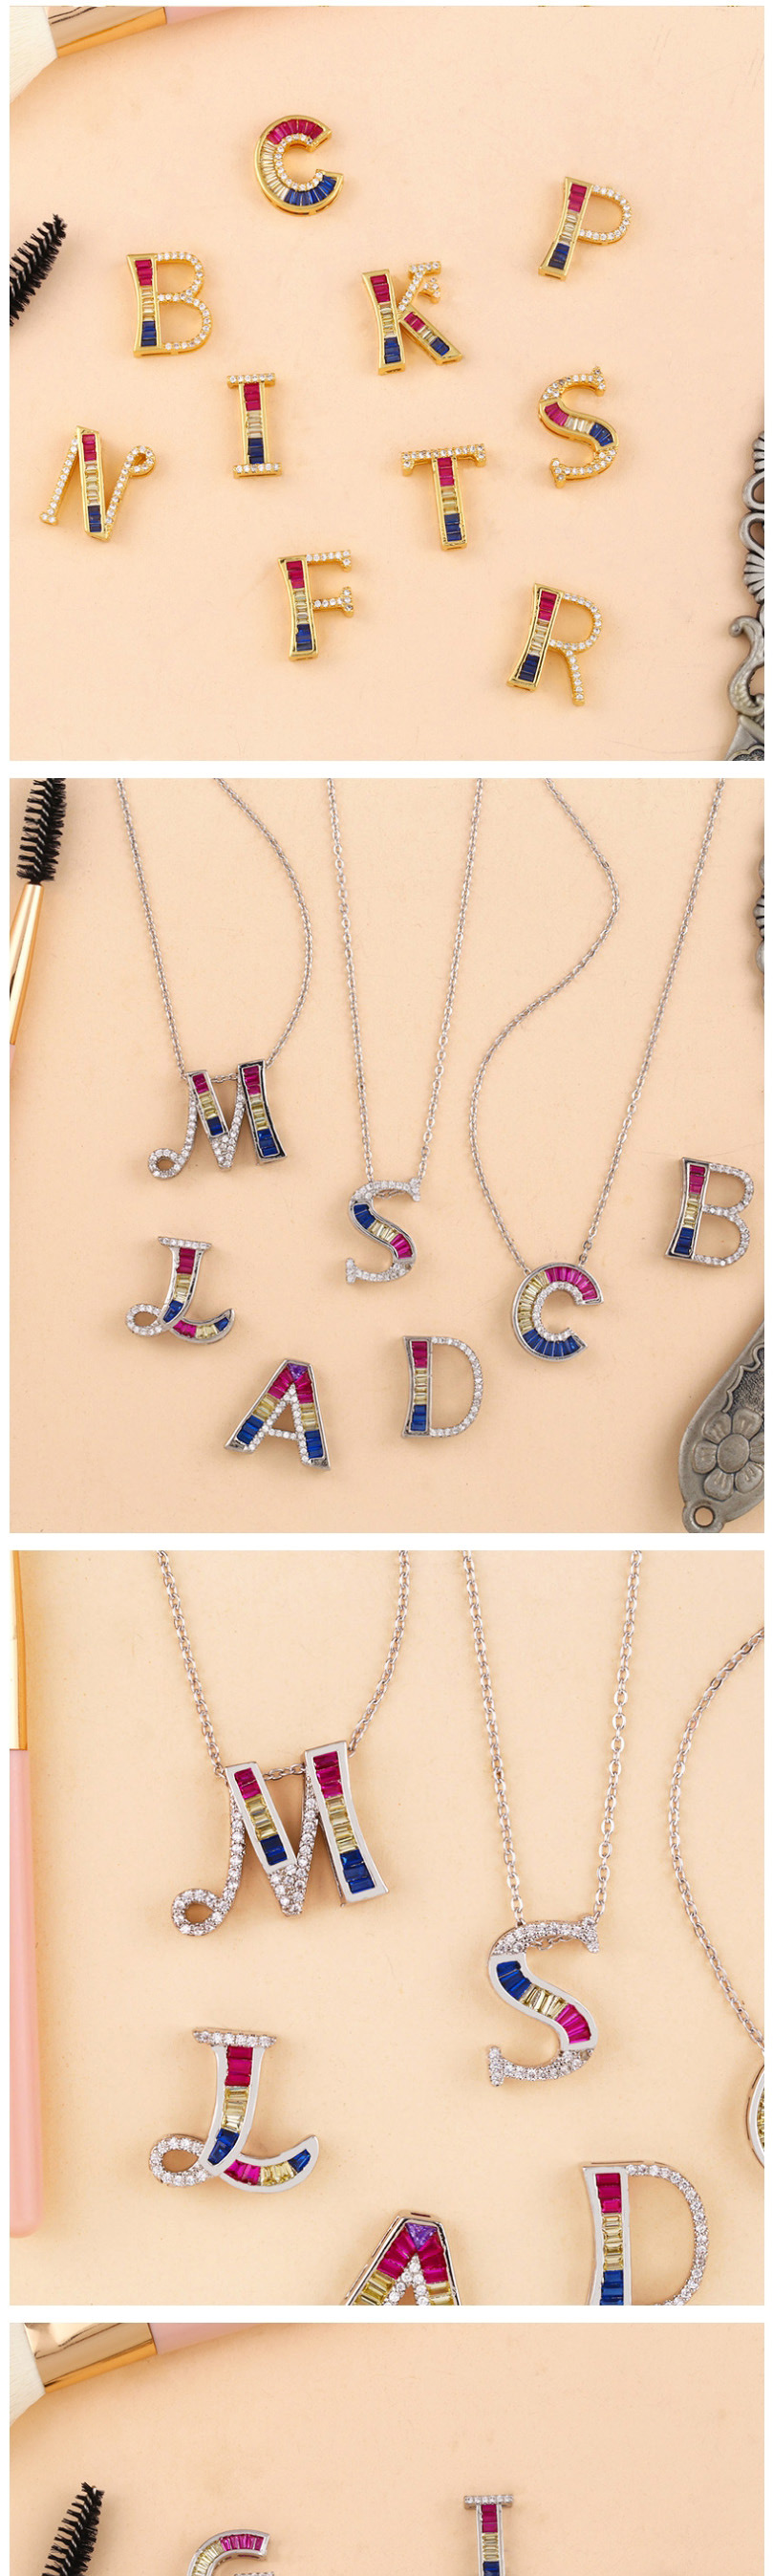 Fashion Silver P English Alphabet Set With Zircon Necklace,Necklaces